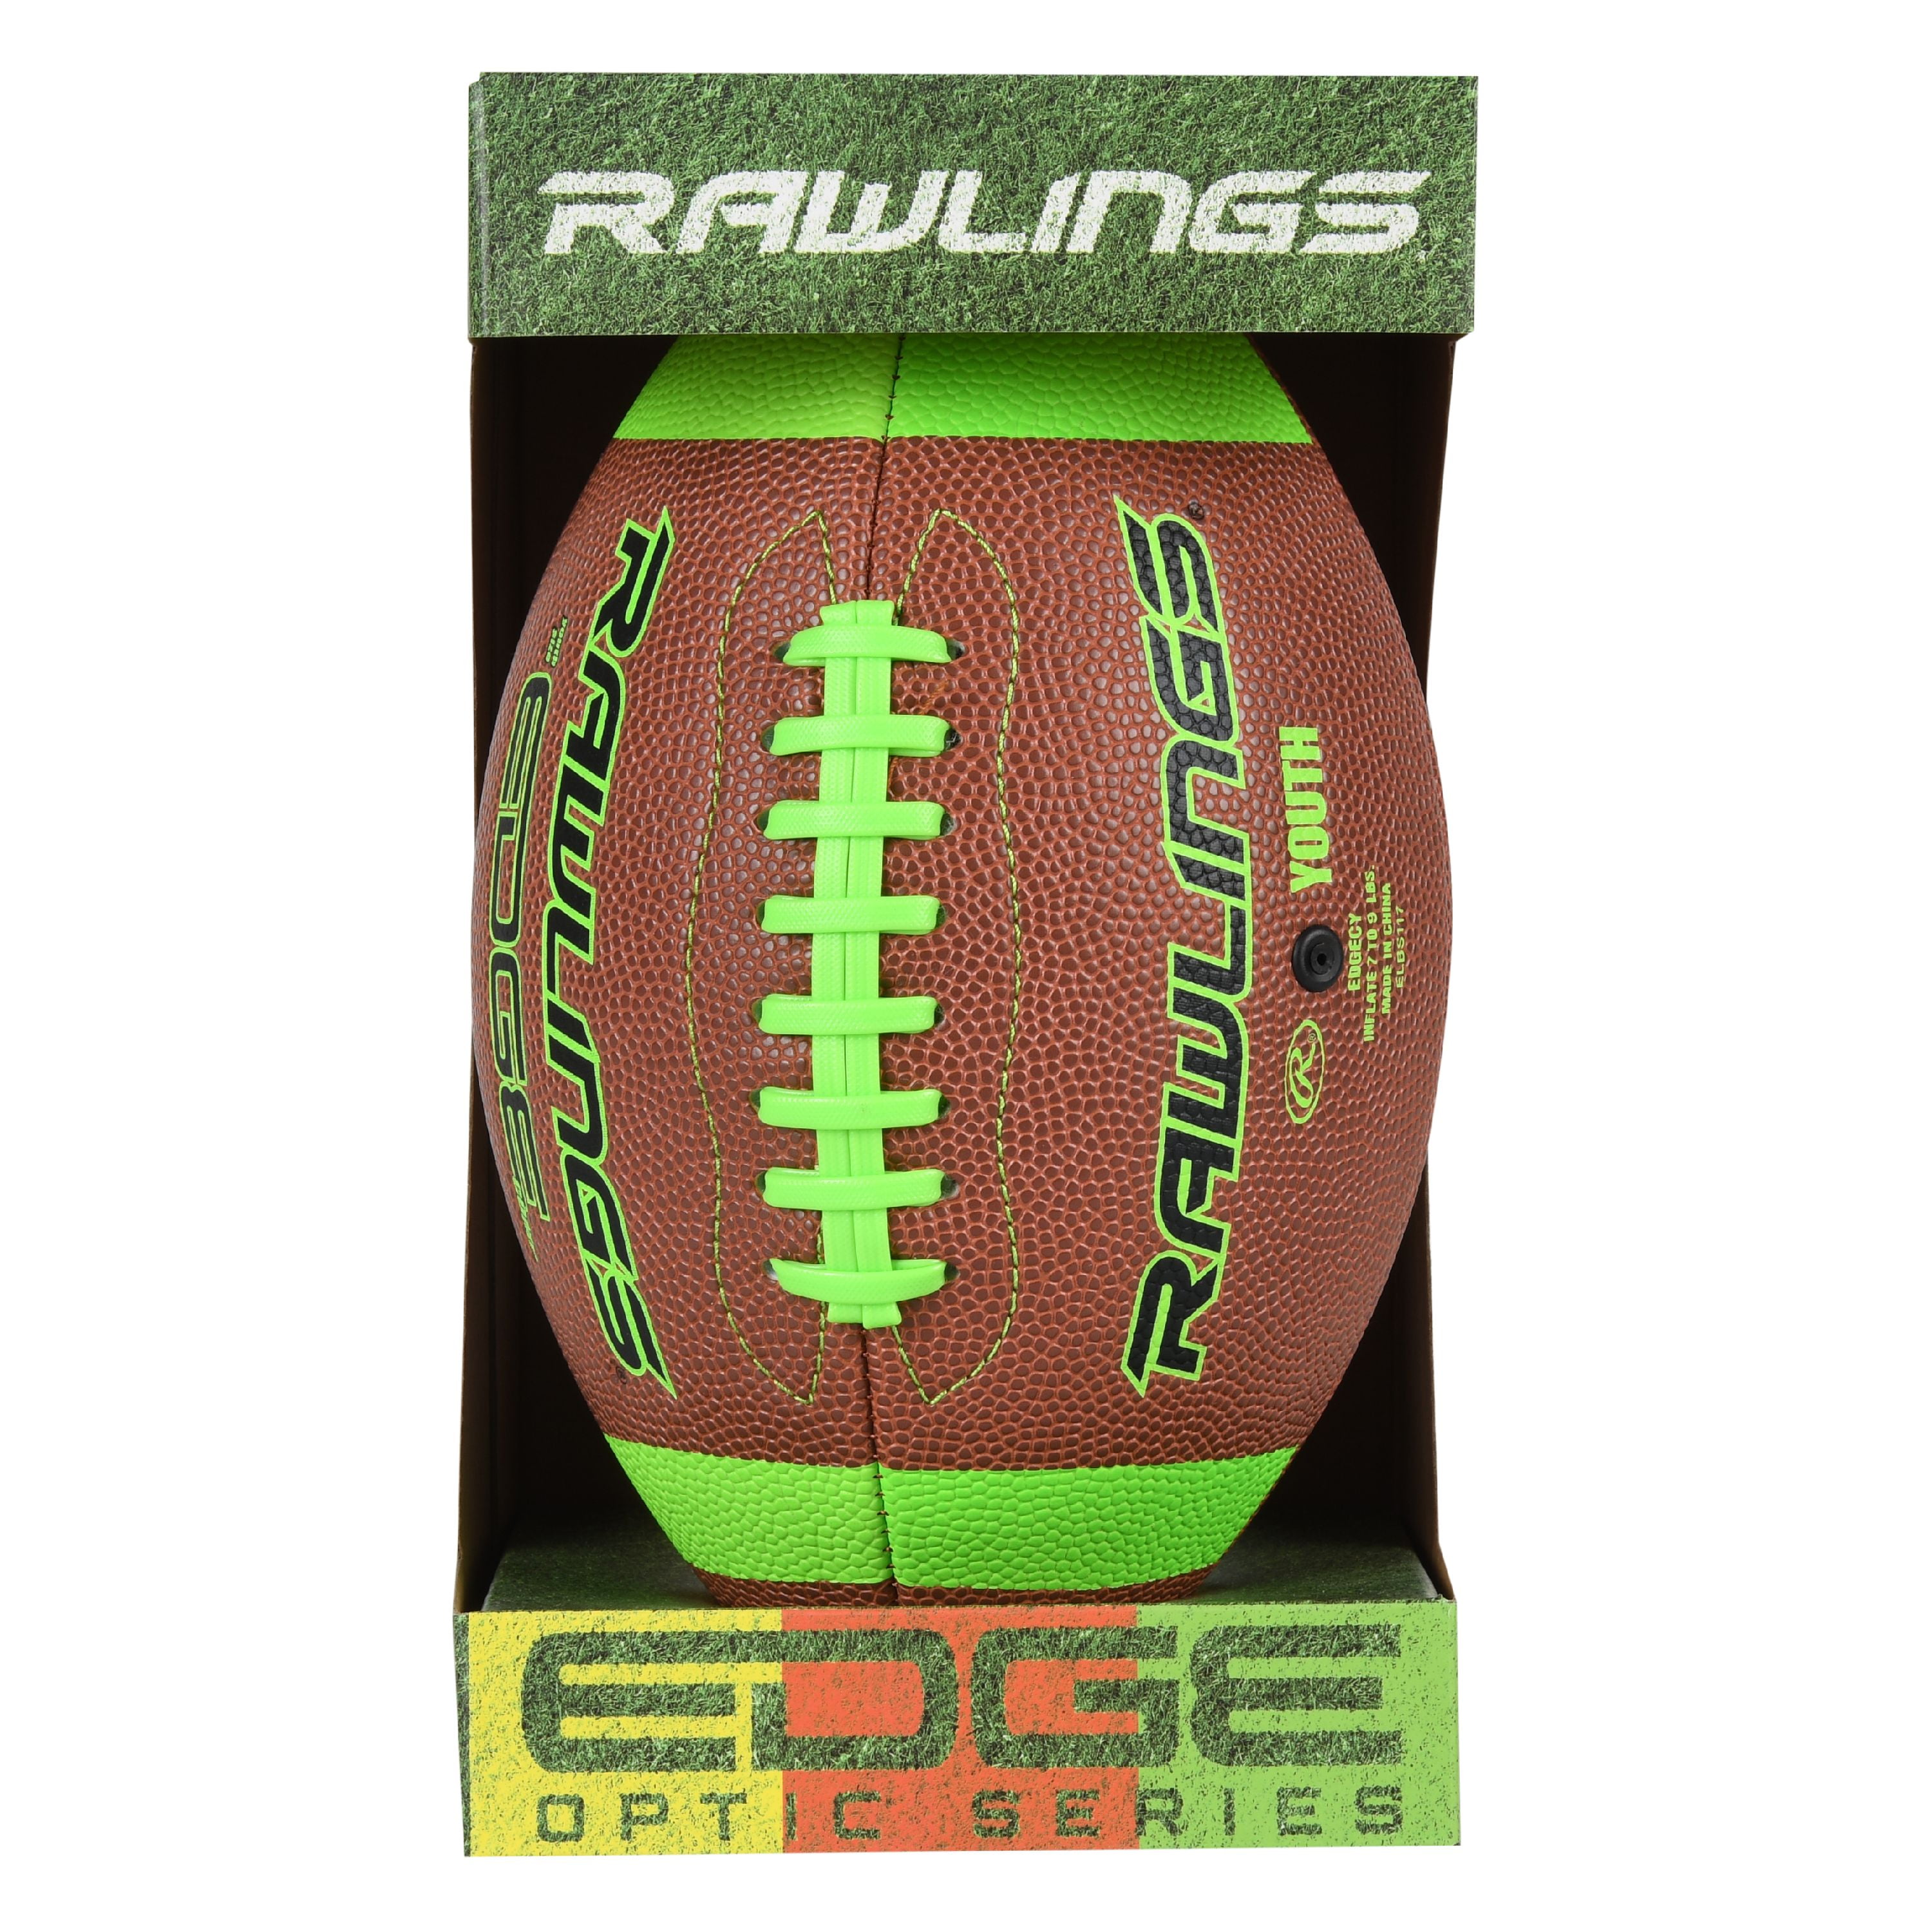 Rawlings Official Edge Youth Football, Green - Walmart.com